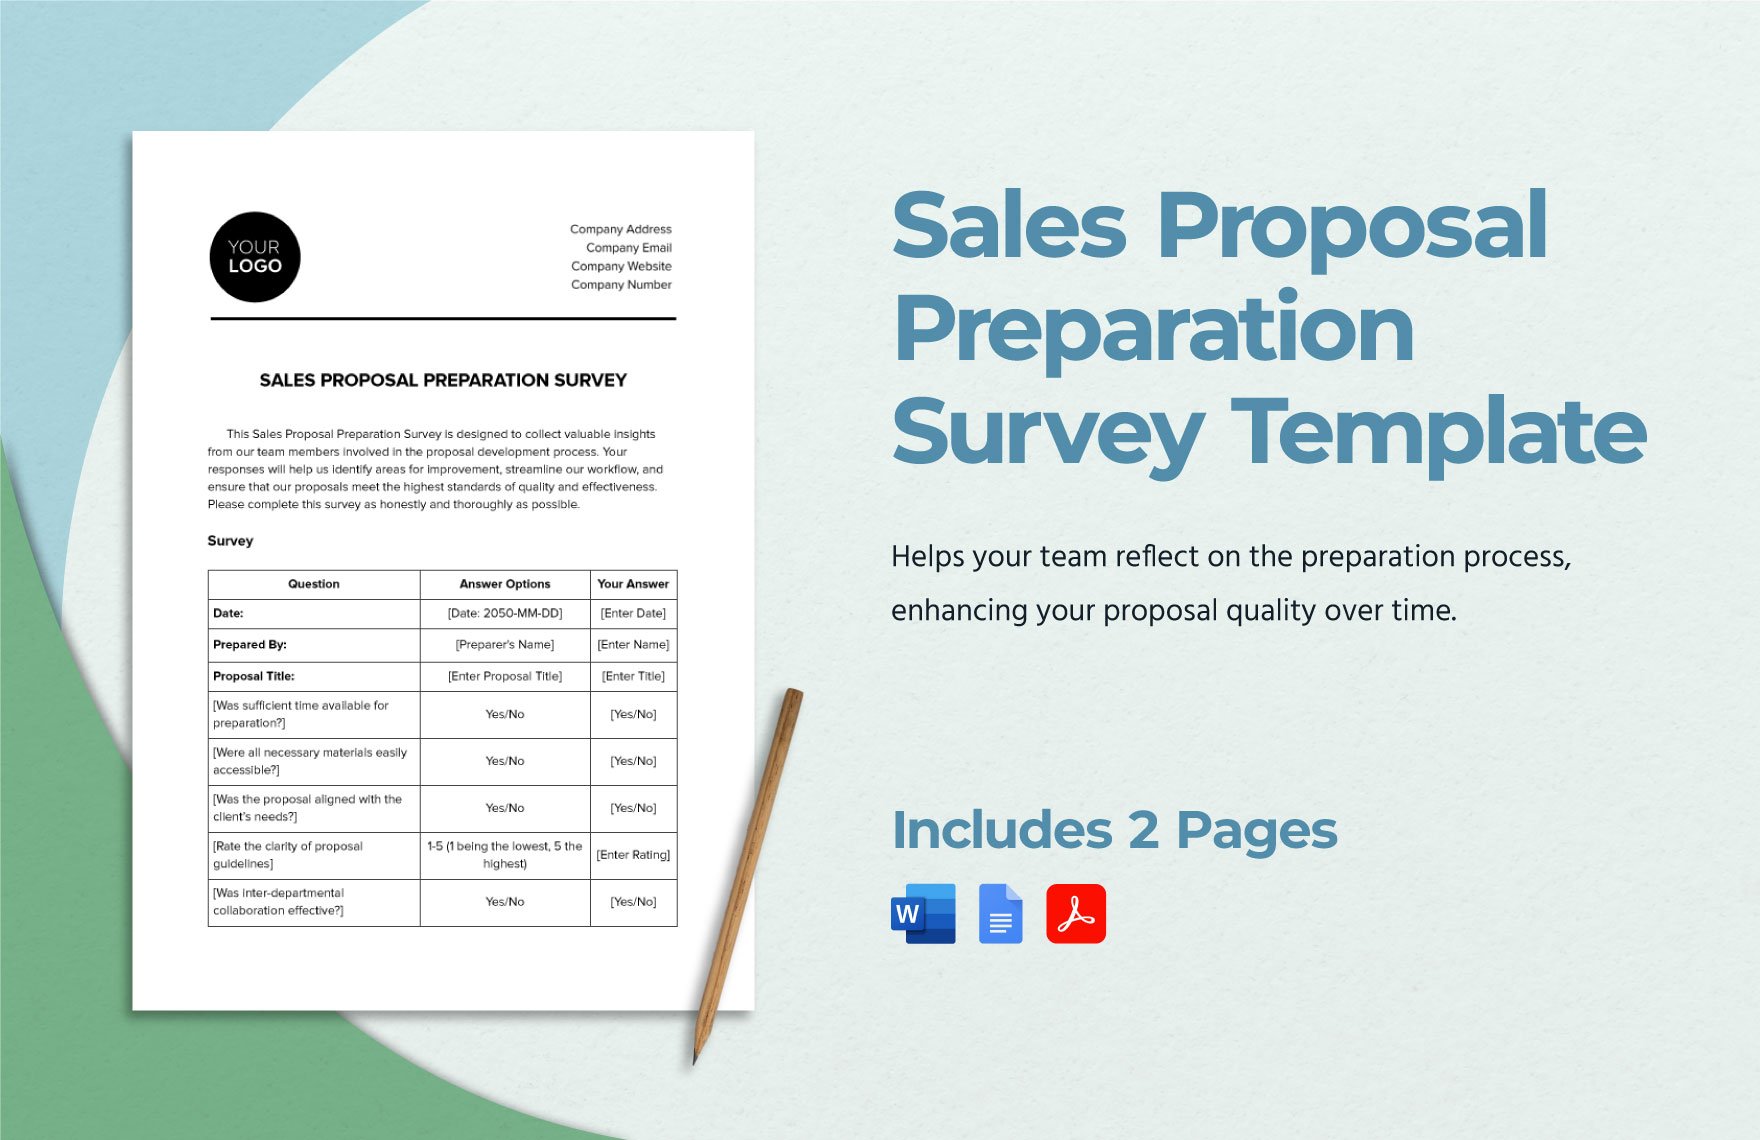 Sales Proposal Preparation Survey Template in Word, Google Docs, PDF